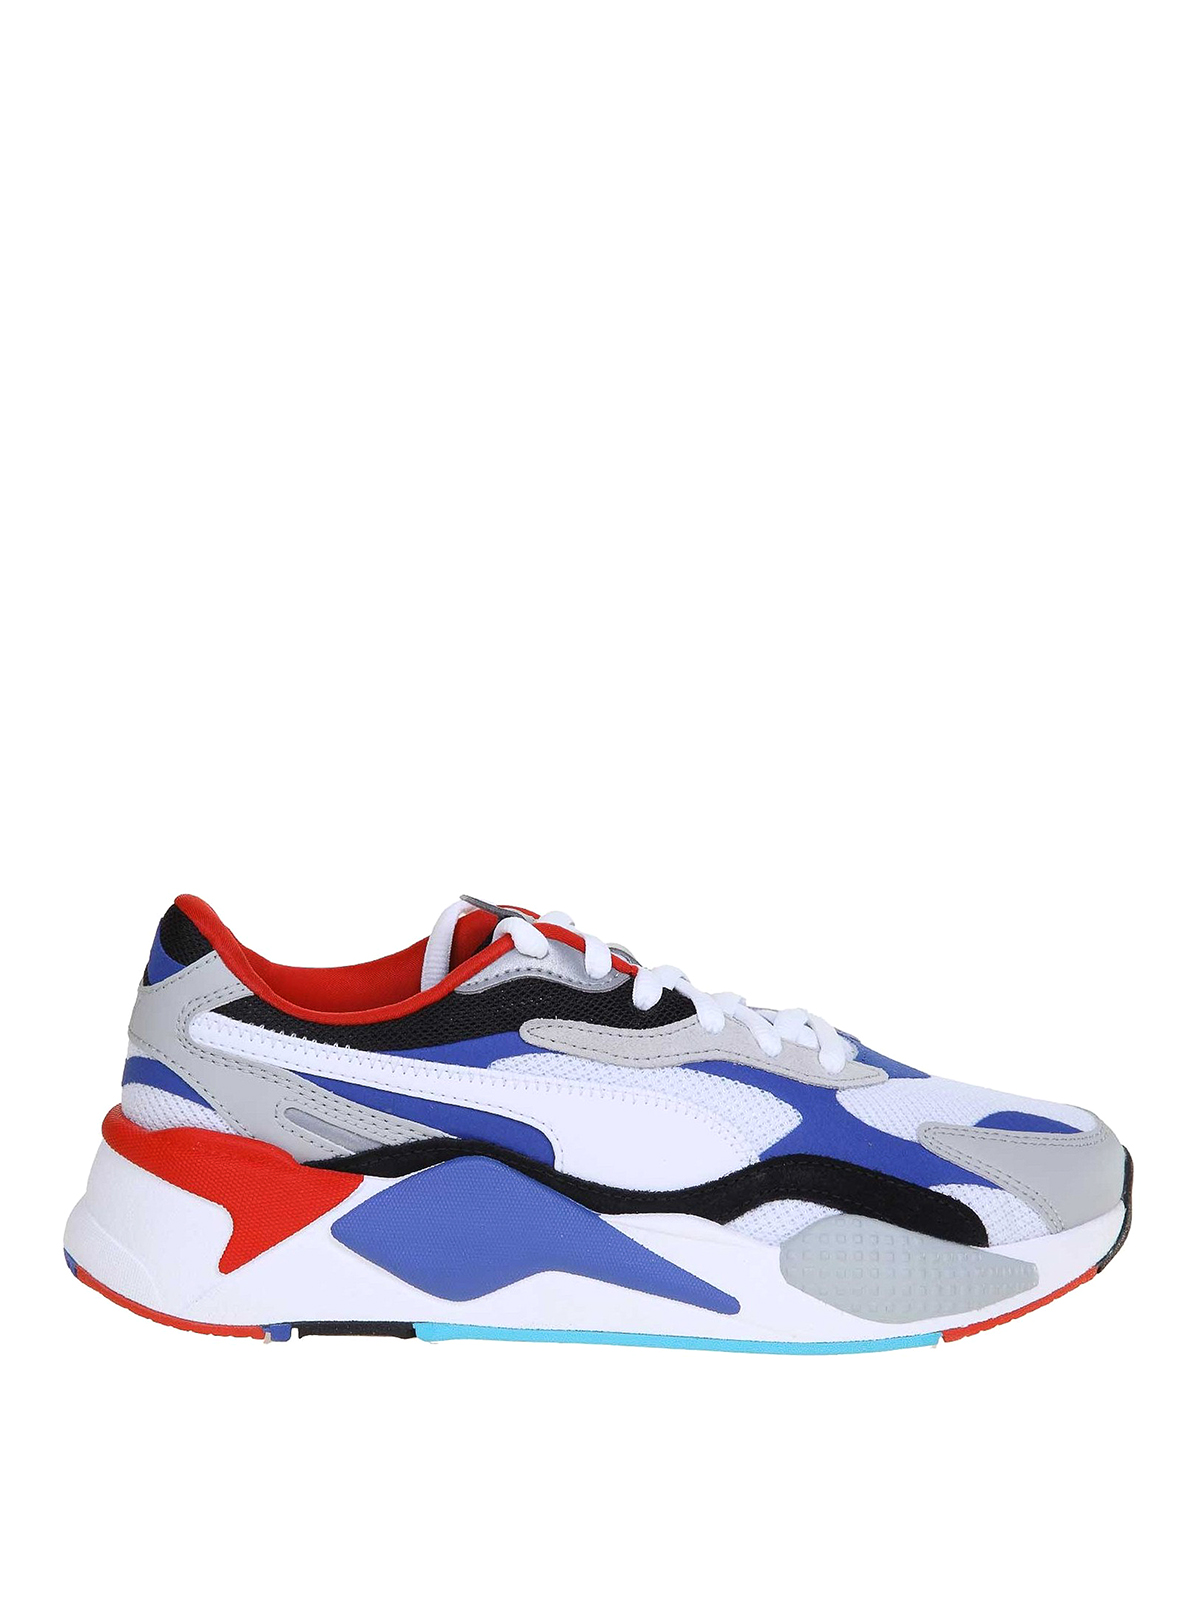 Puma - Rs-x Puzzle multicolour sneakers 